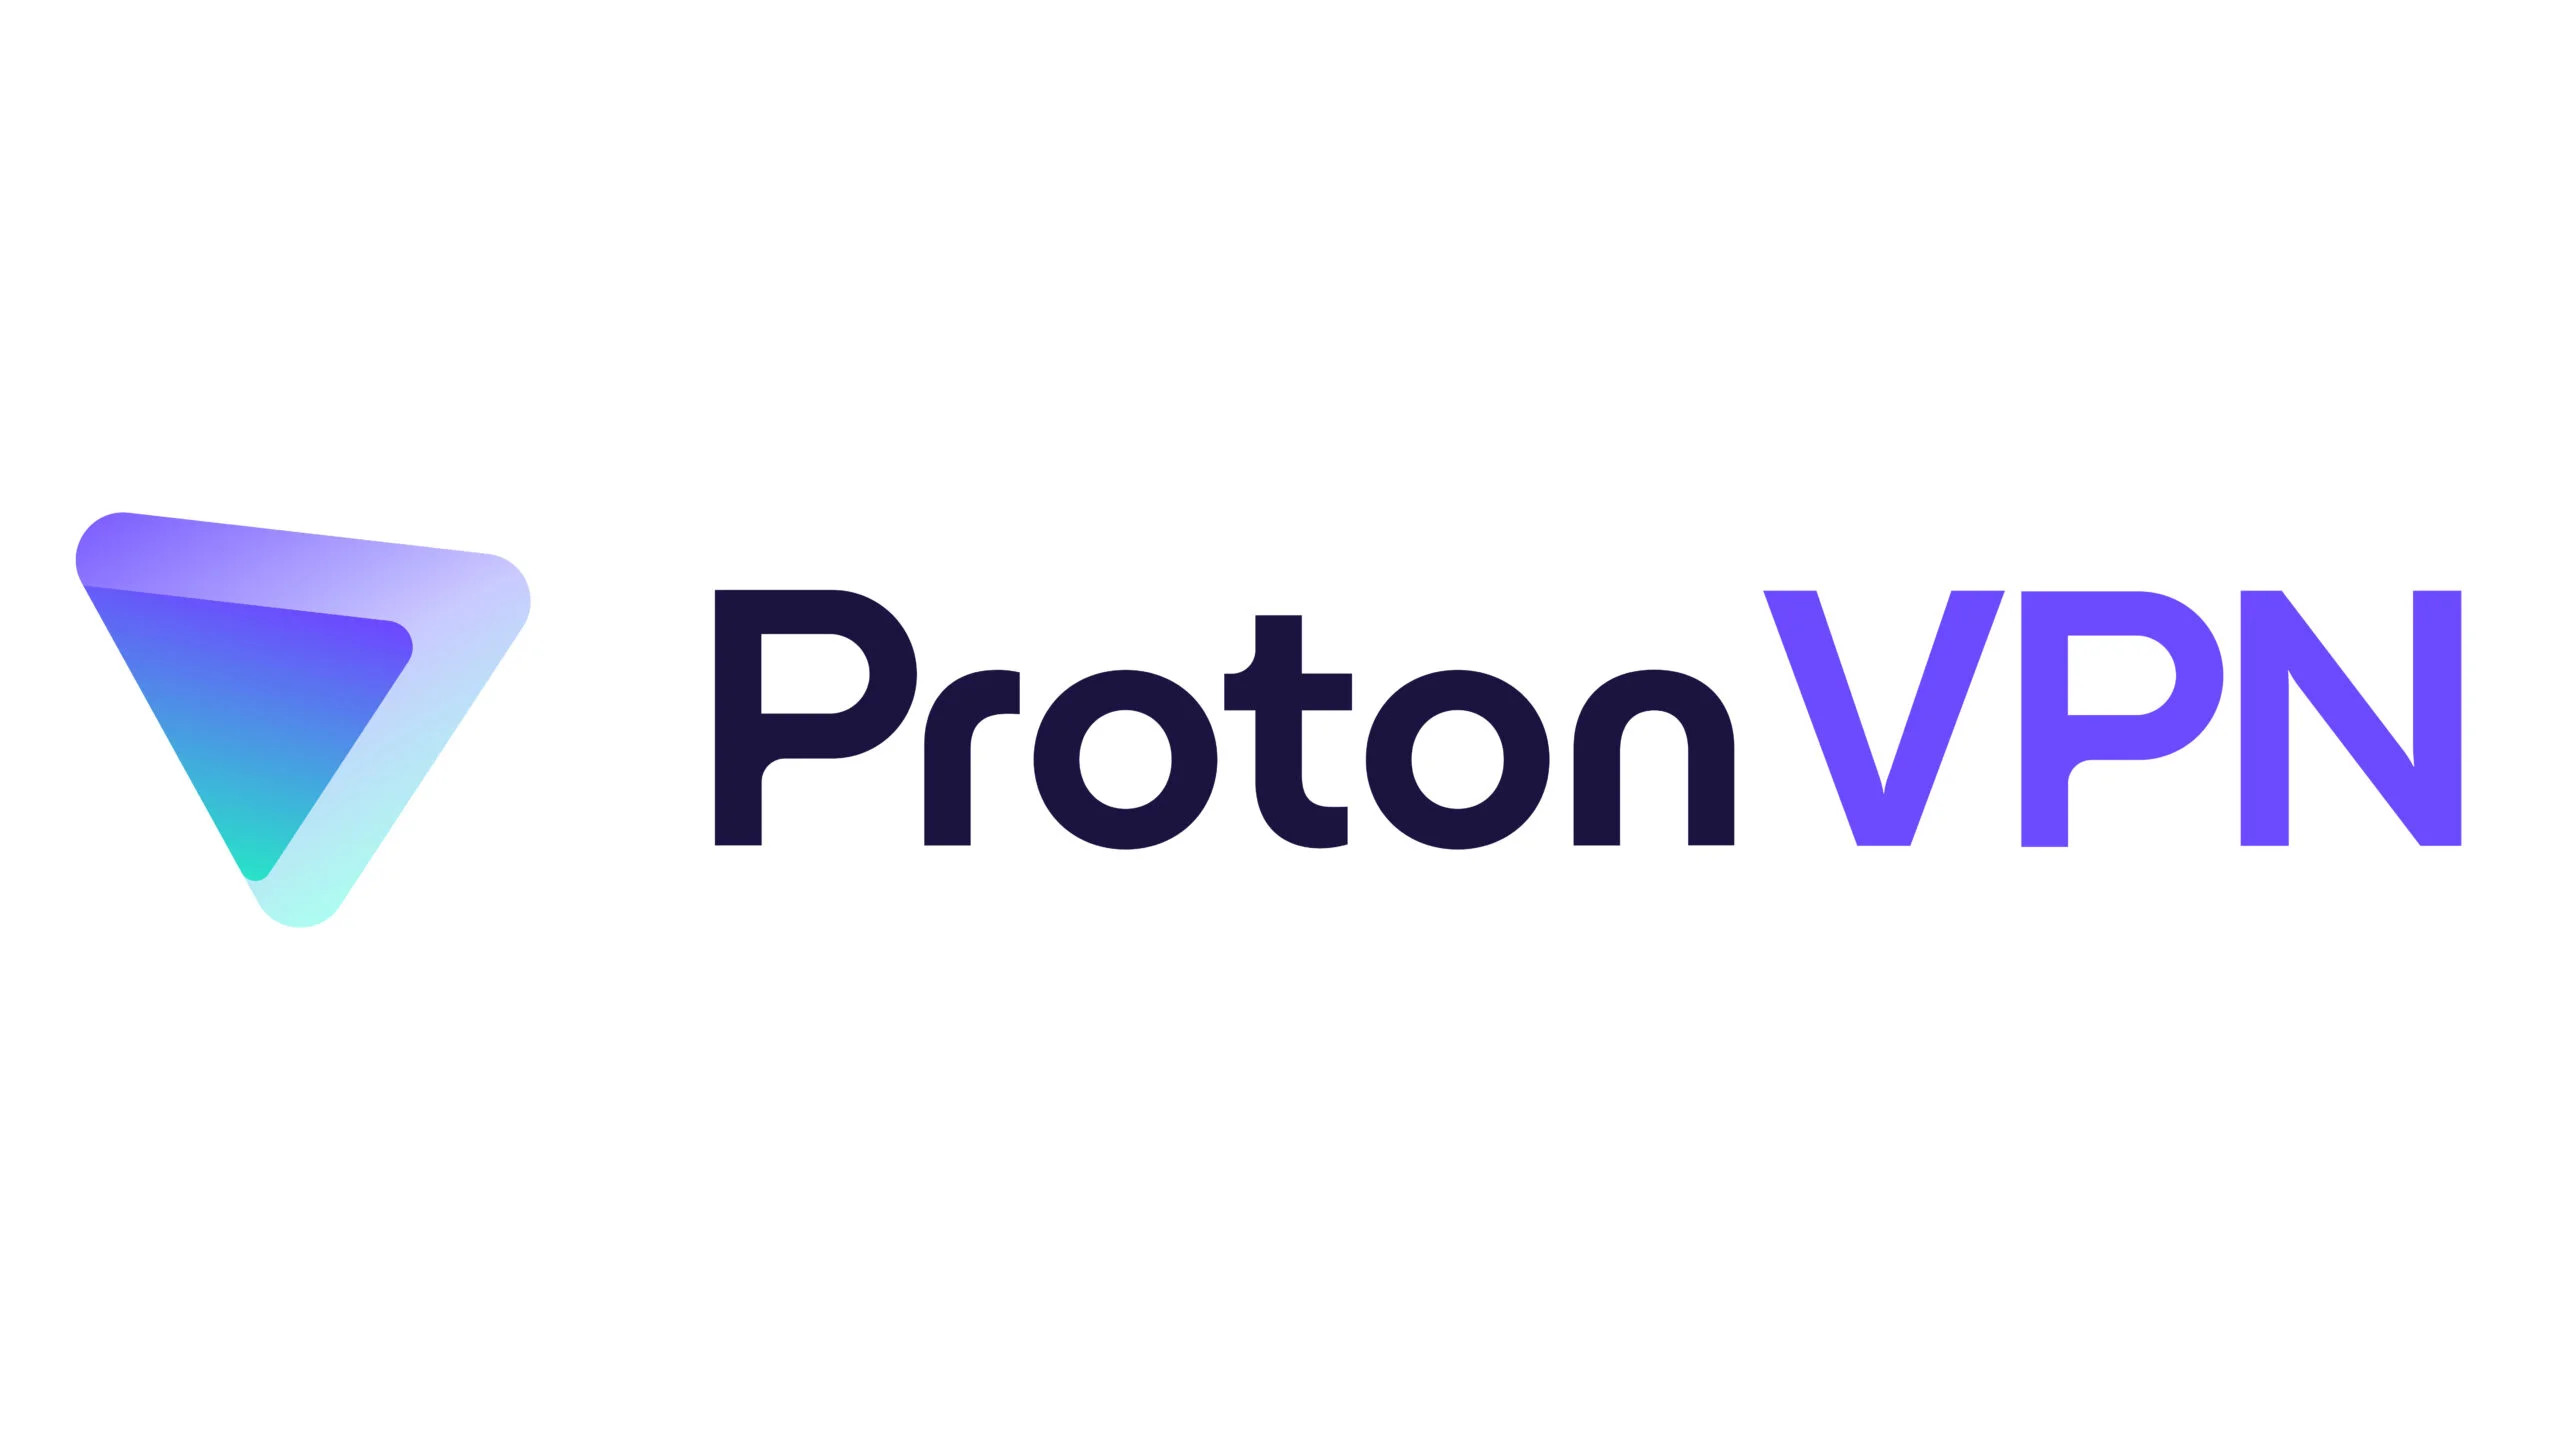 What Is Proton VPN